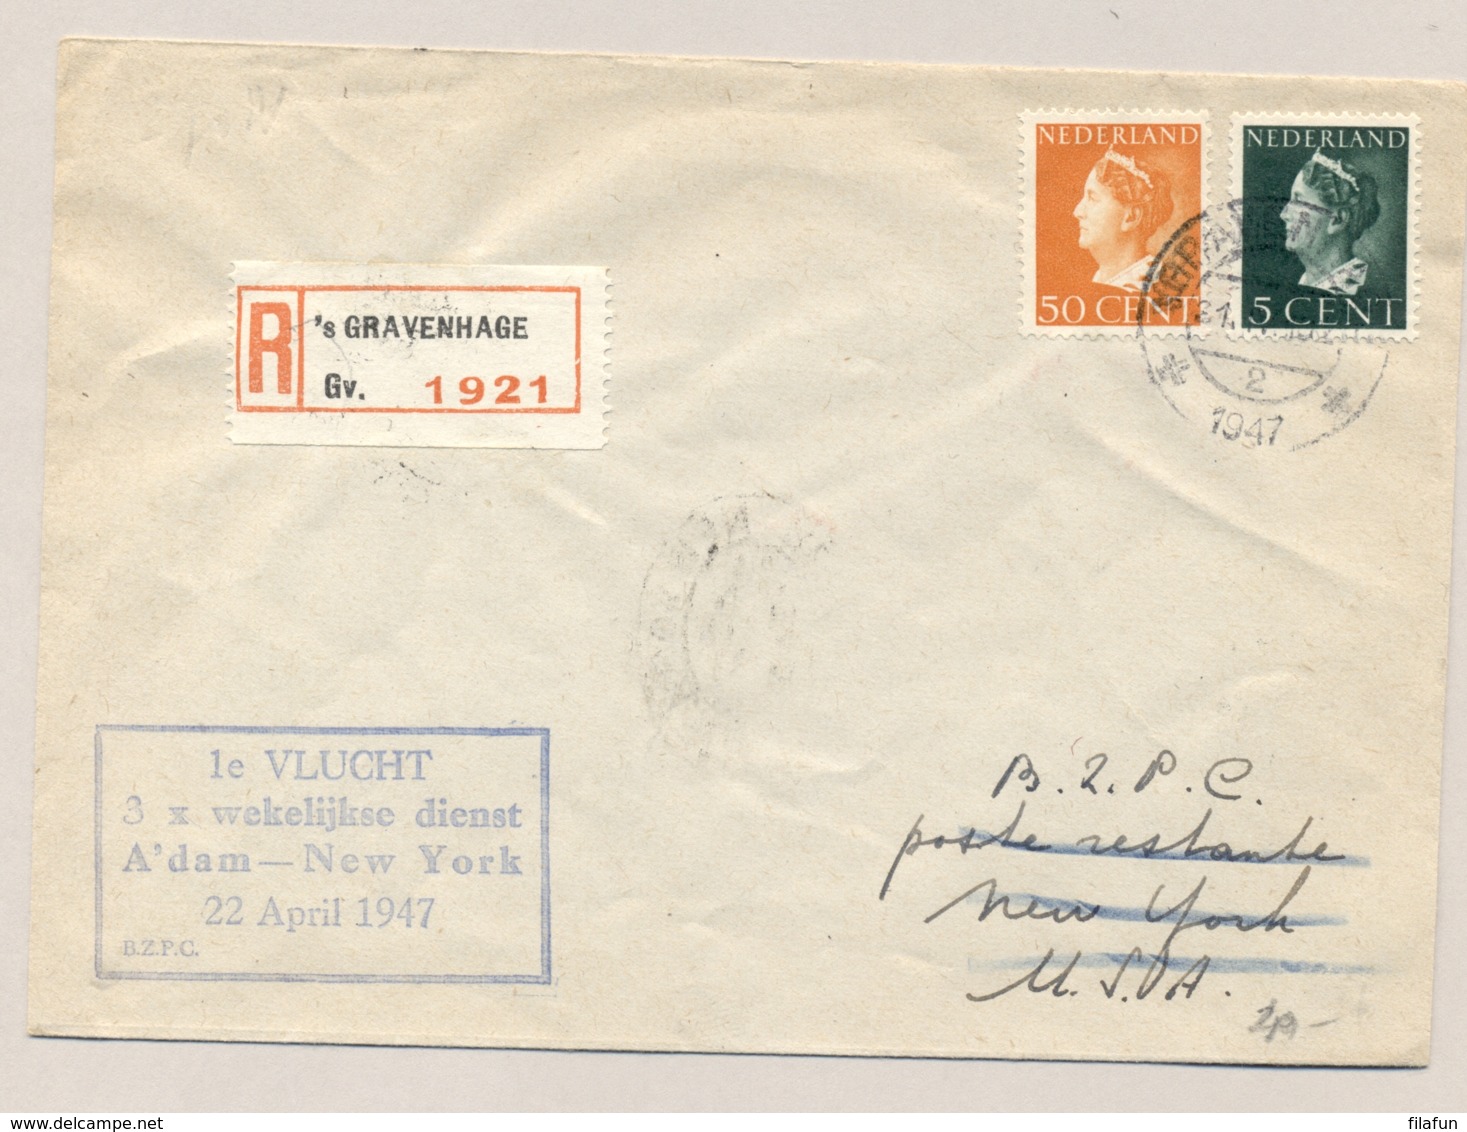 Nederland - 1947 - 5 En 50 Cent Konijnenburg Op R-First Flight Van Amsterdam Naar New York / USA - Lettres & Documents